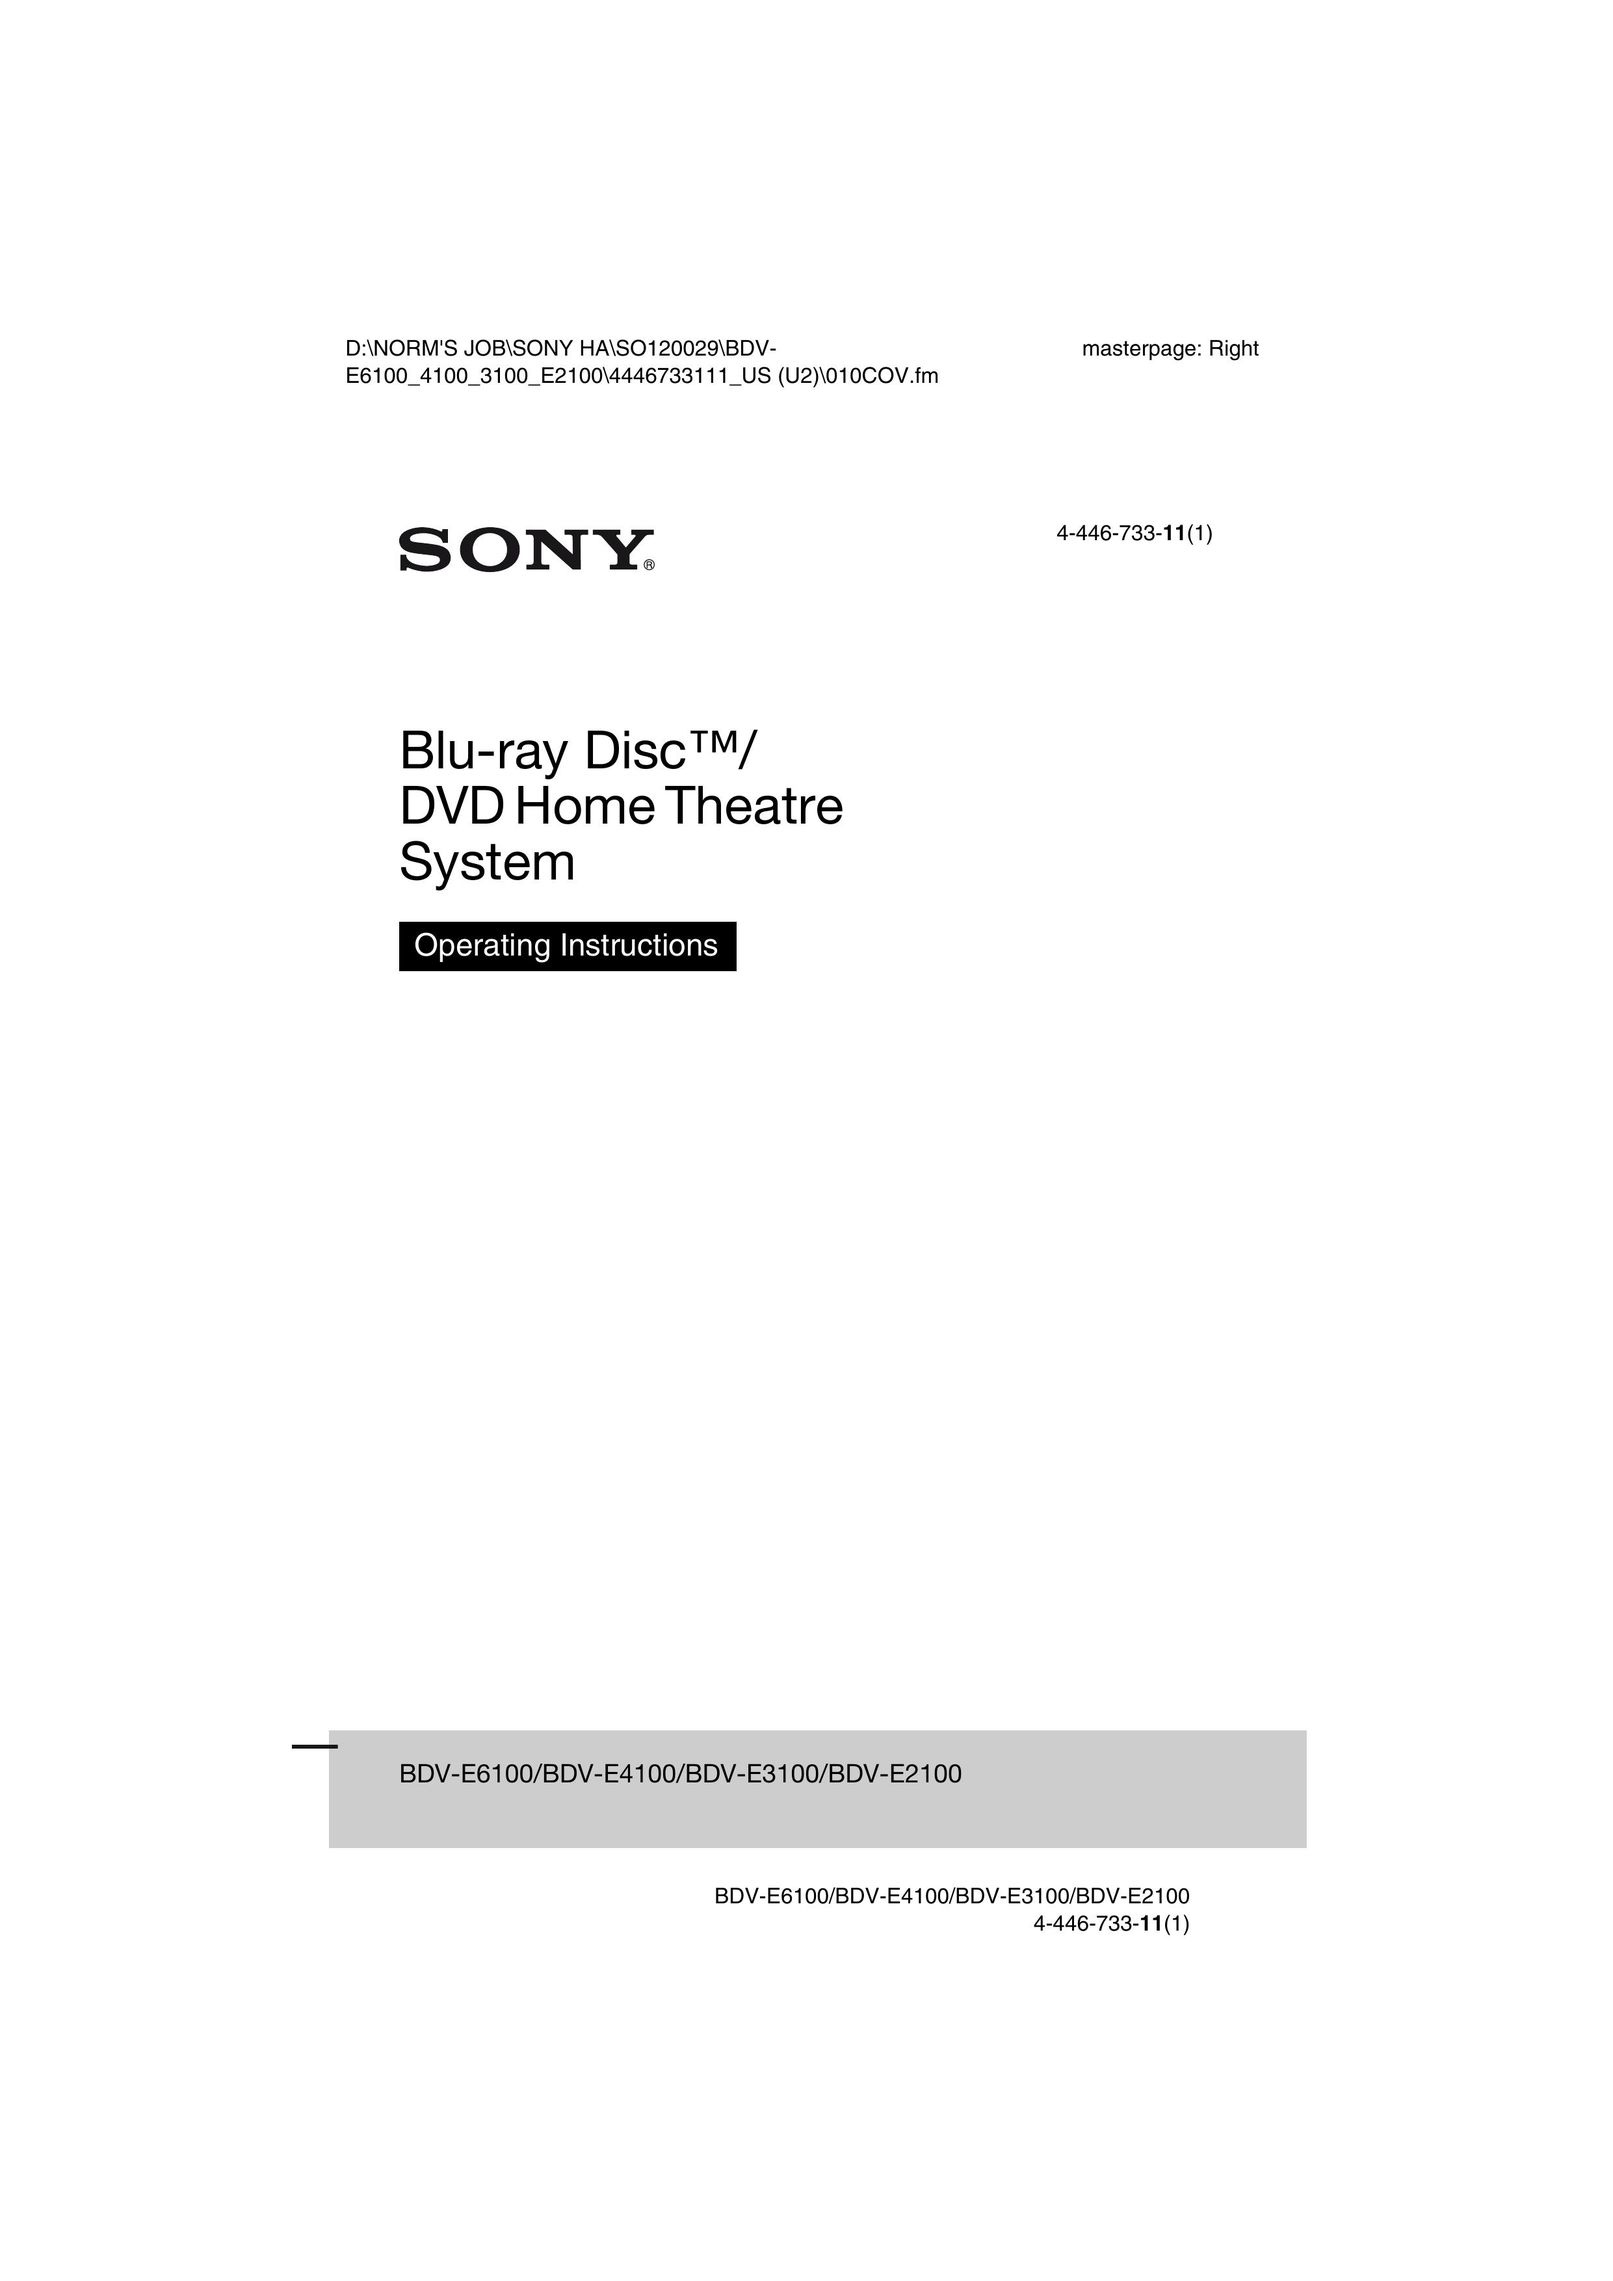 Sony BDV-E3100 Bluetooth Headset User Manual